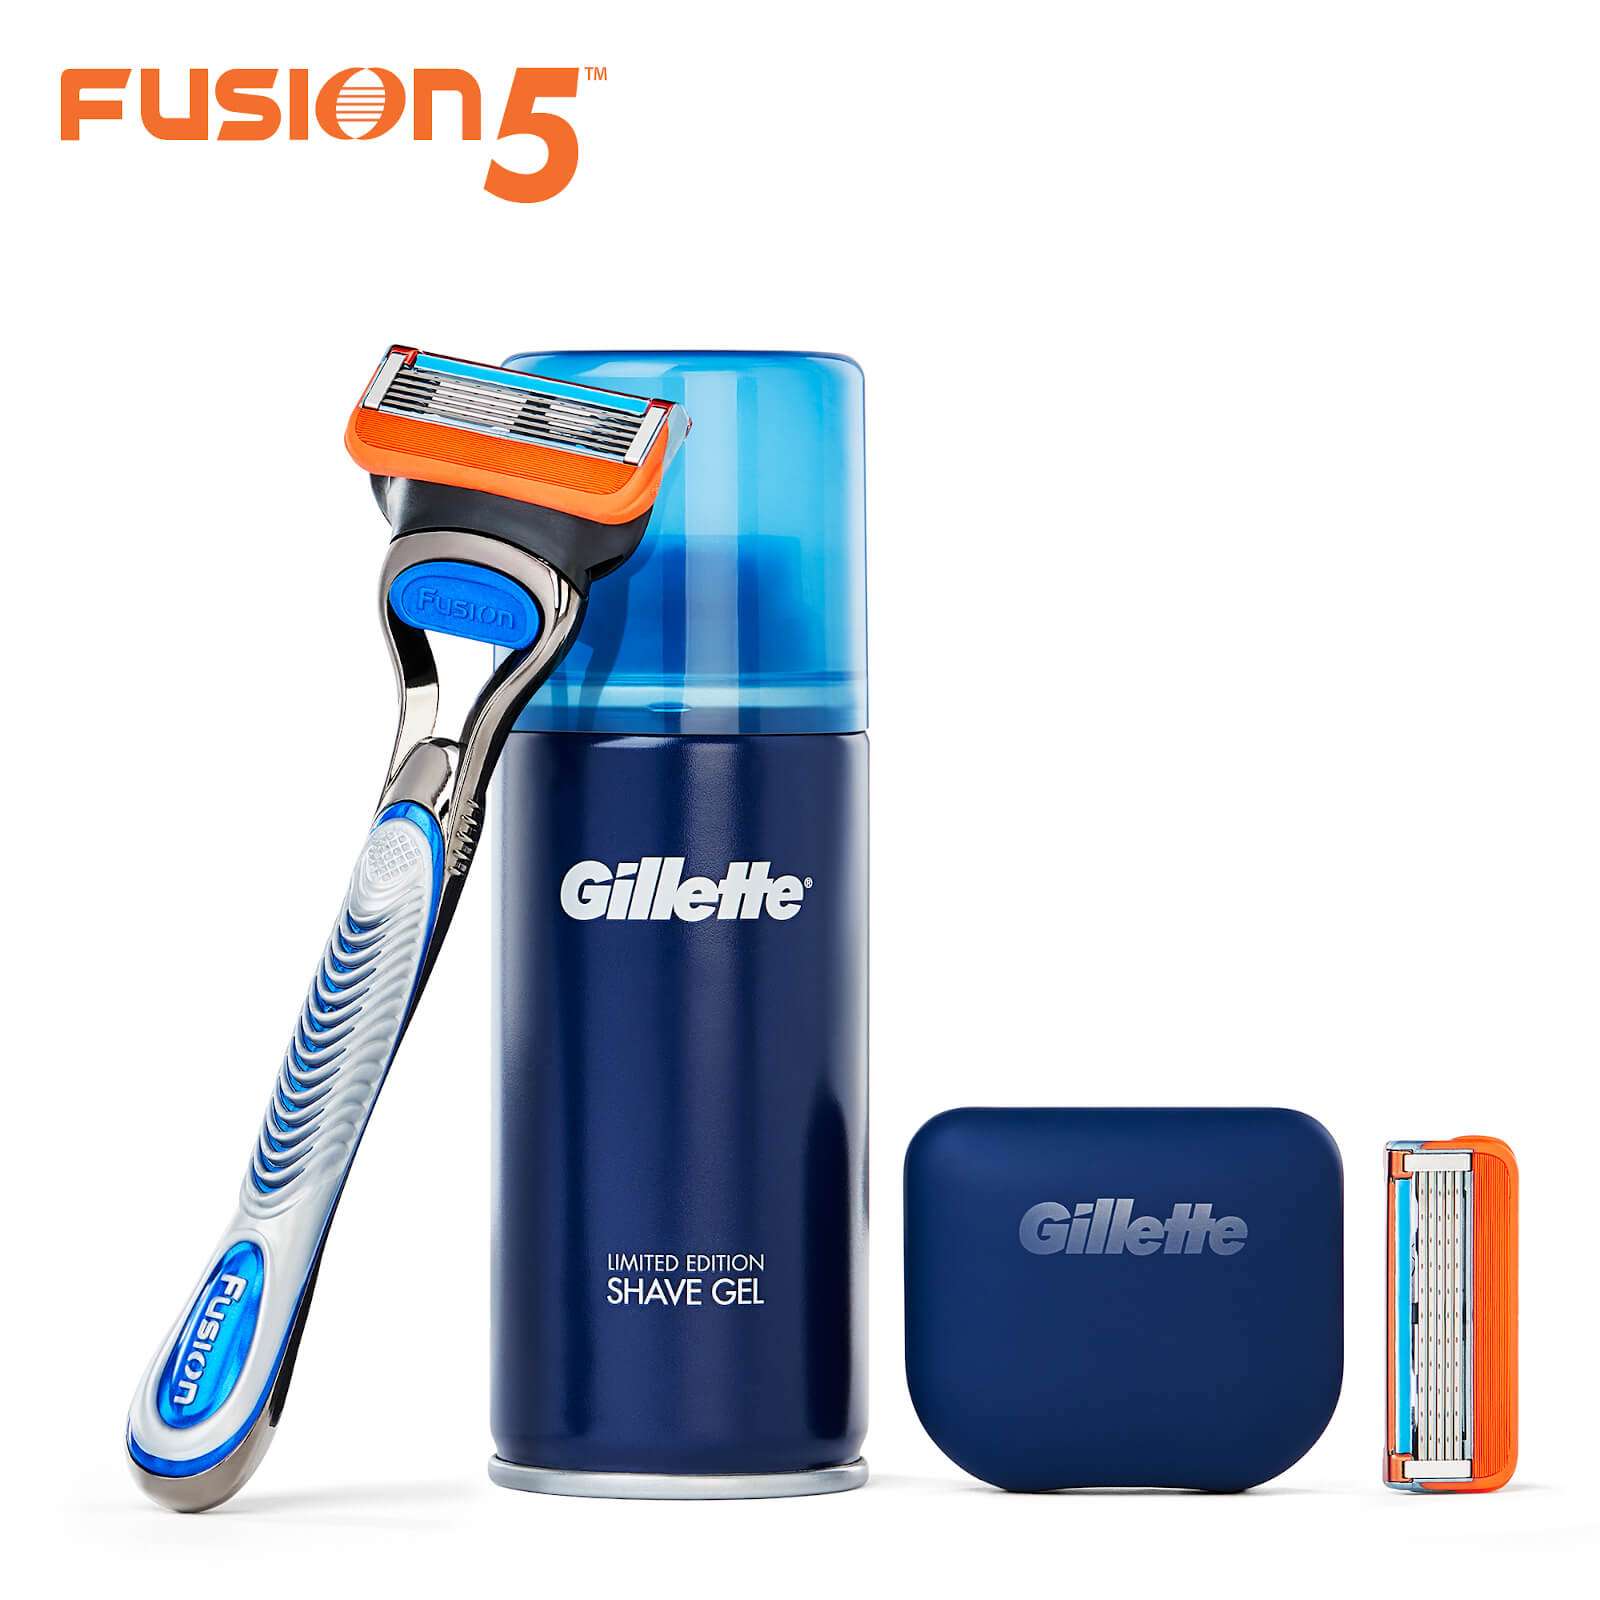 Gillette Fusion5 Starter Kit Subscription - Trial 1 - 2 Month Plan